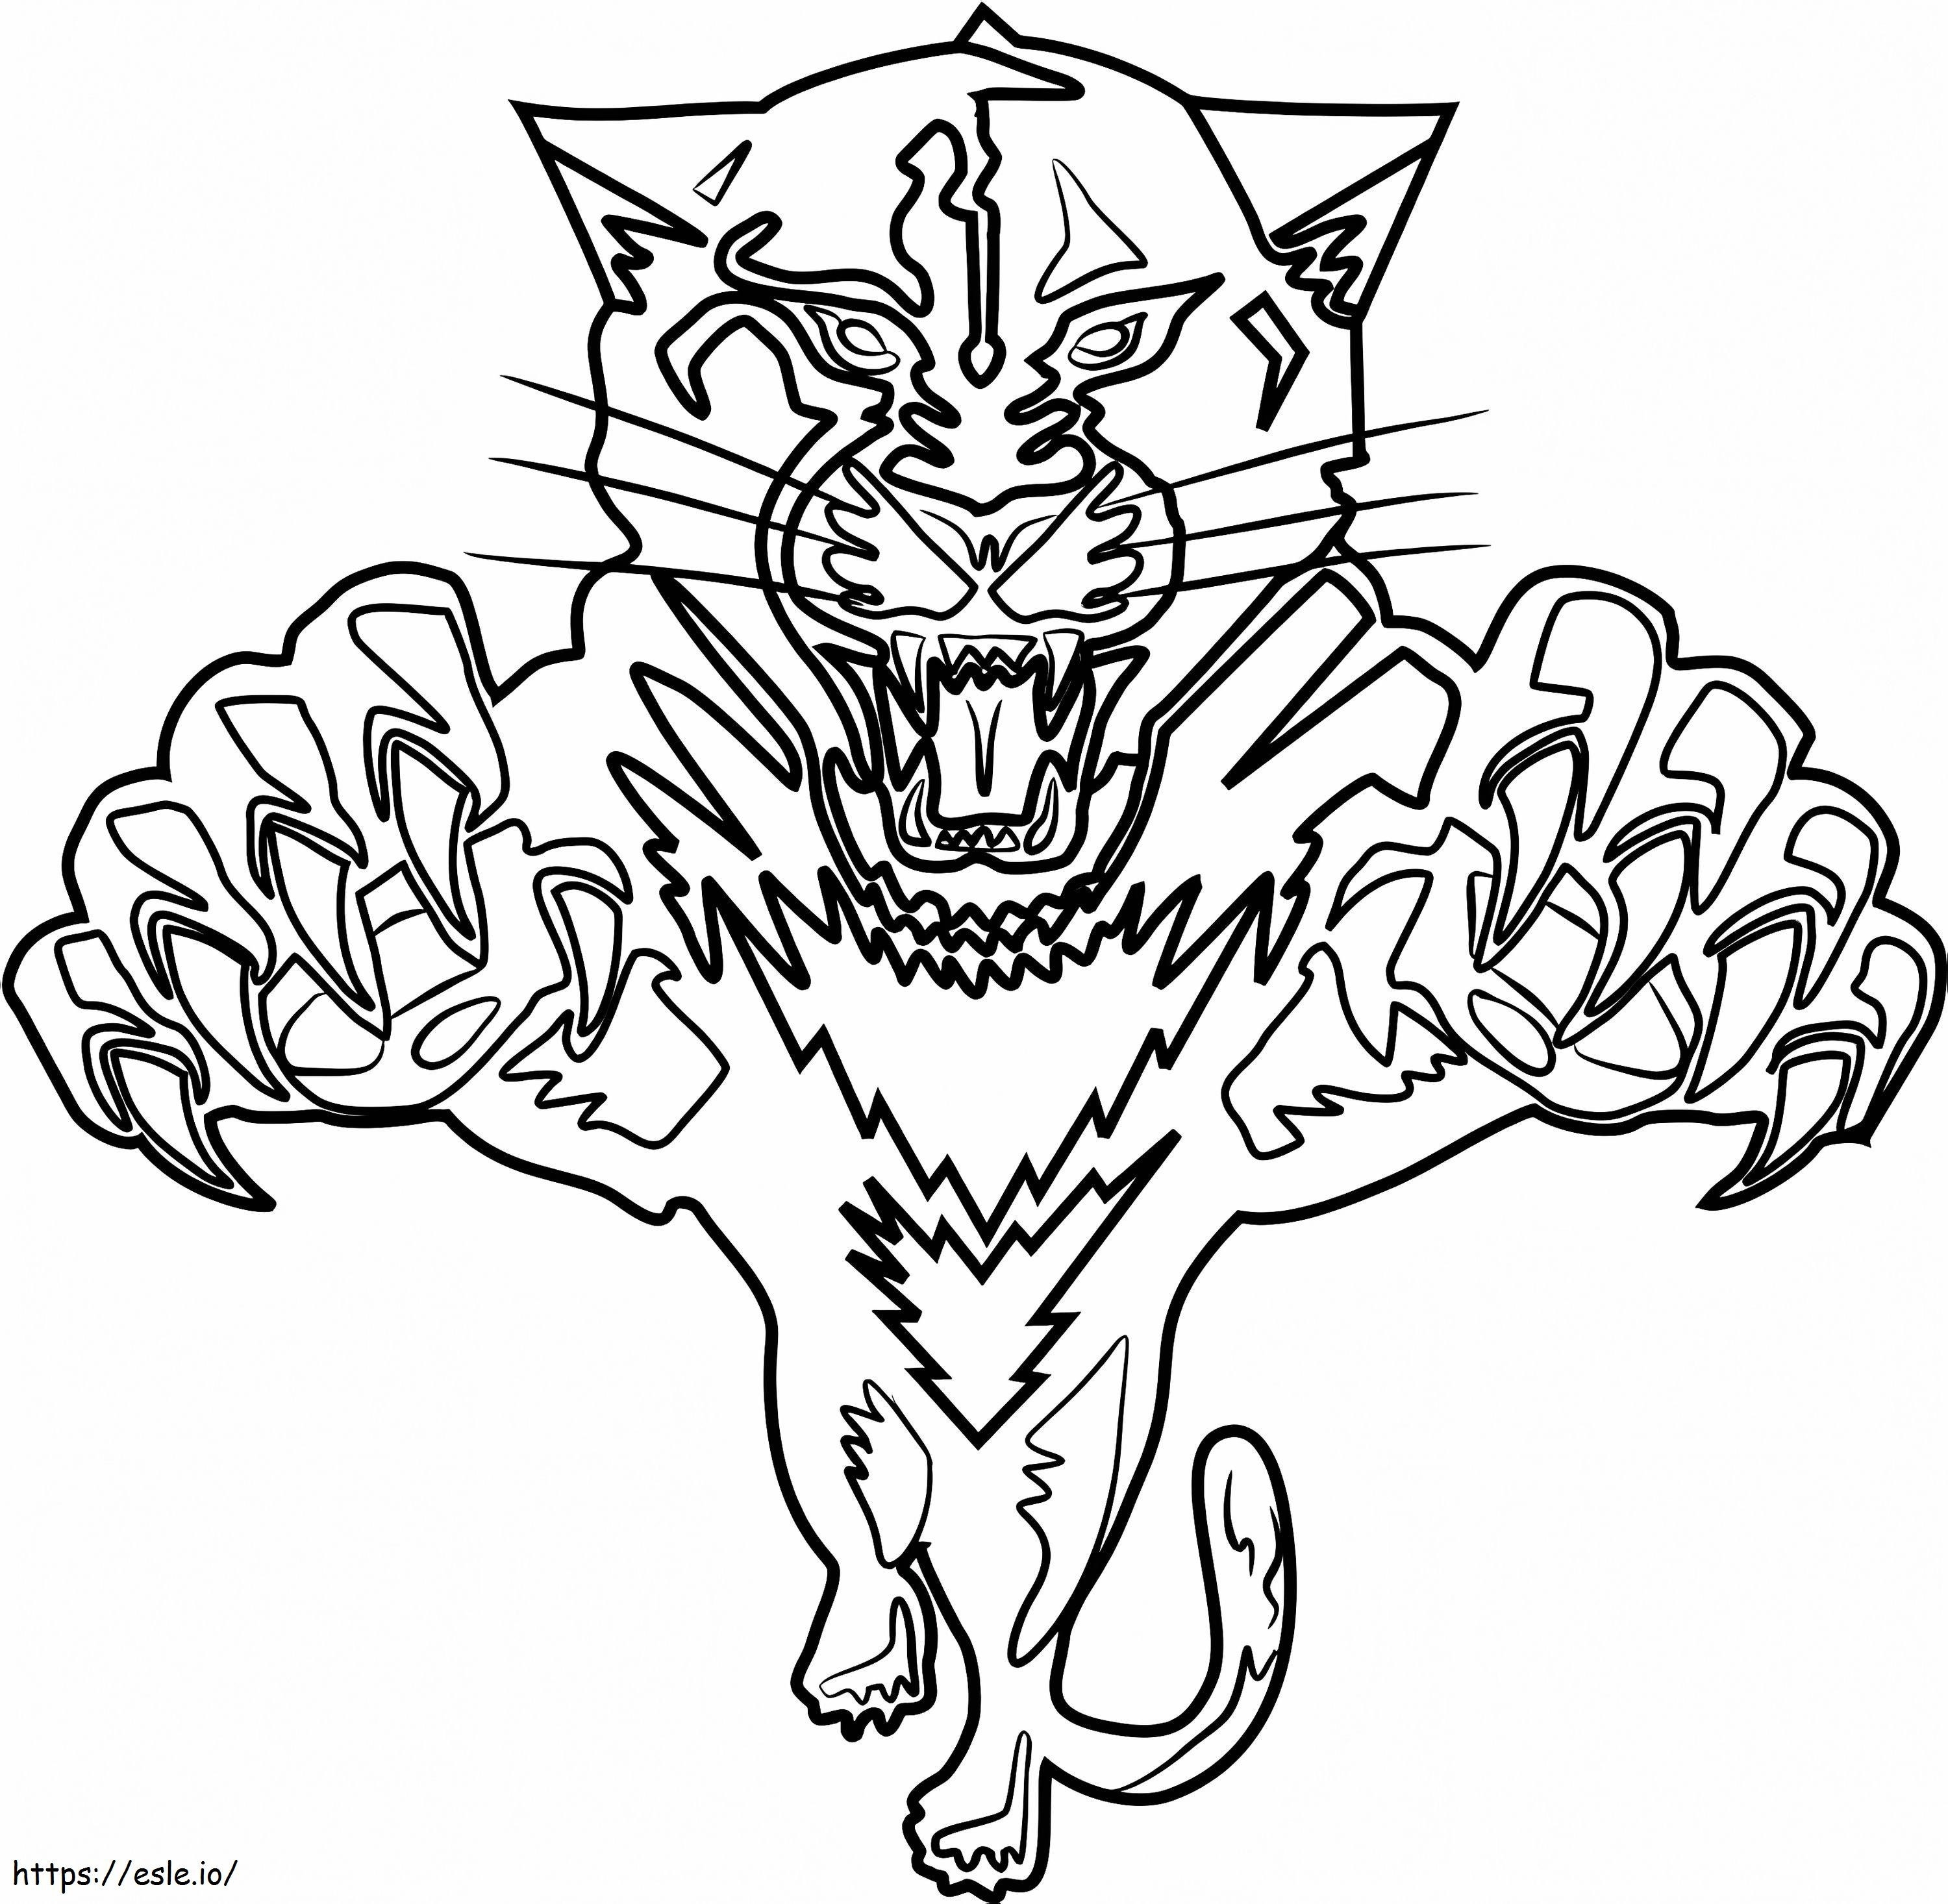 Florida Panthers-logo kleurplaat kleurplaat